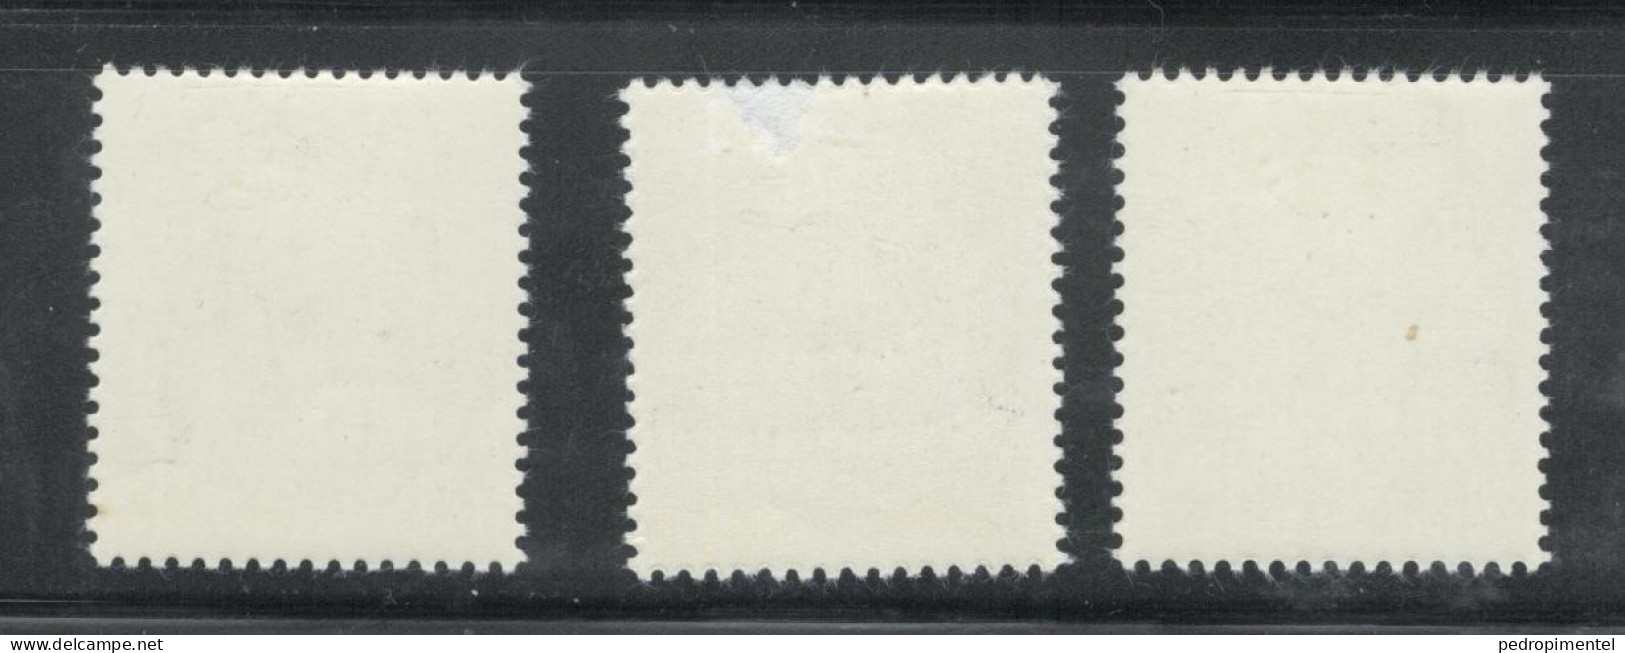 Portugal Stamps 1966 "Bocage" Condition MH OG #994-996 - Nuevos